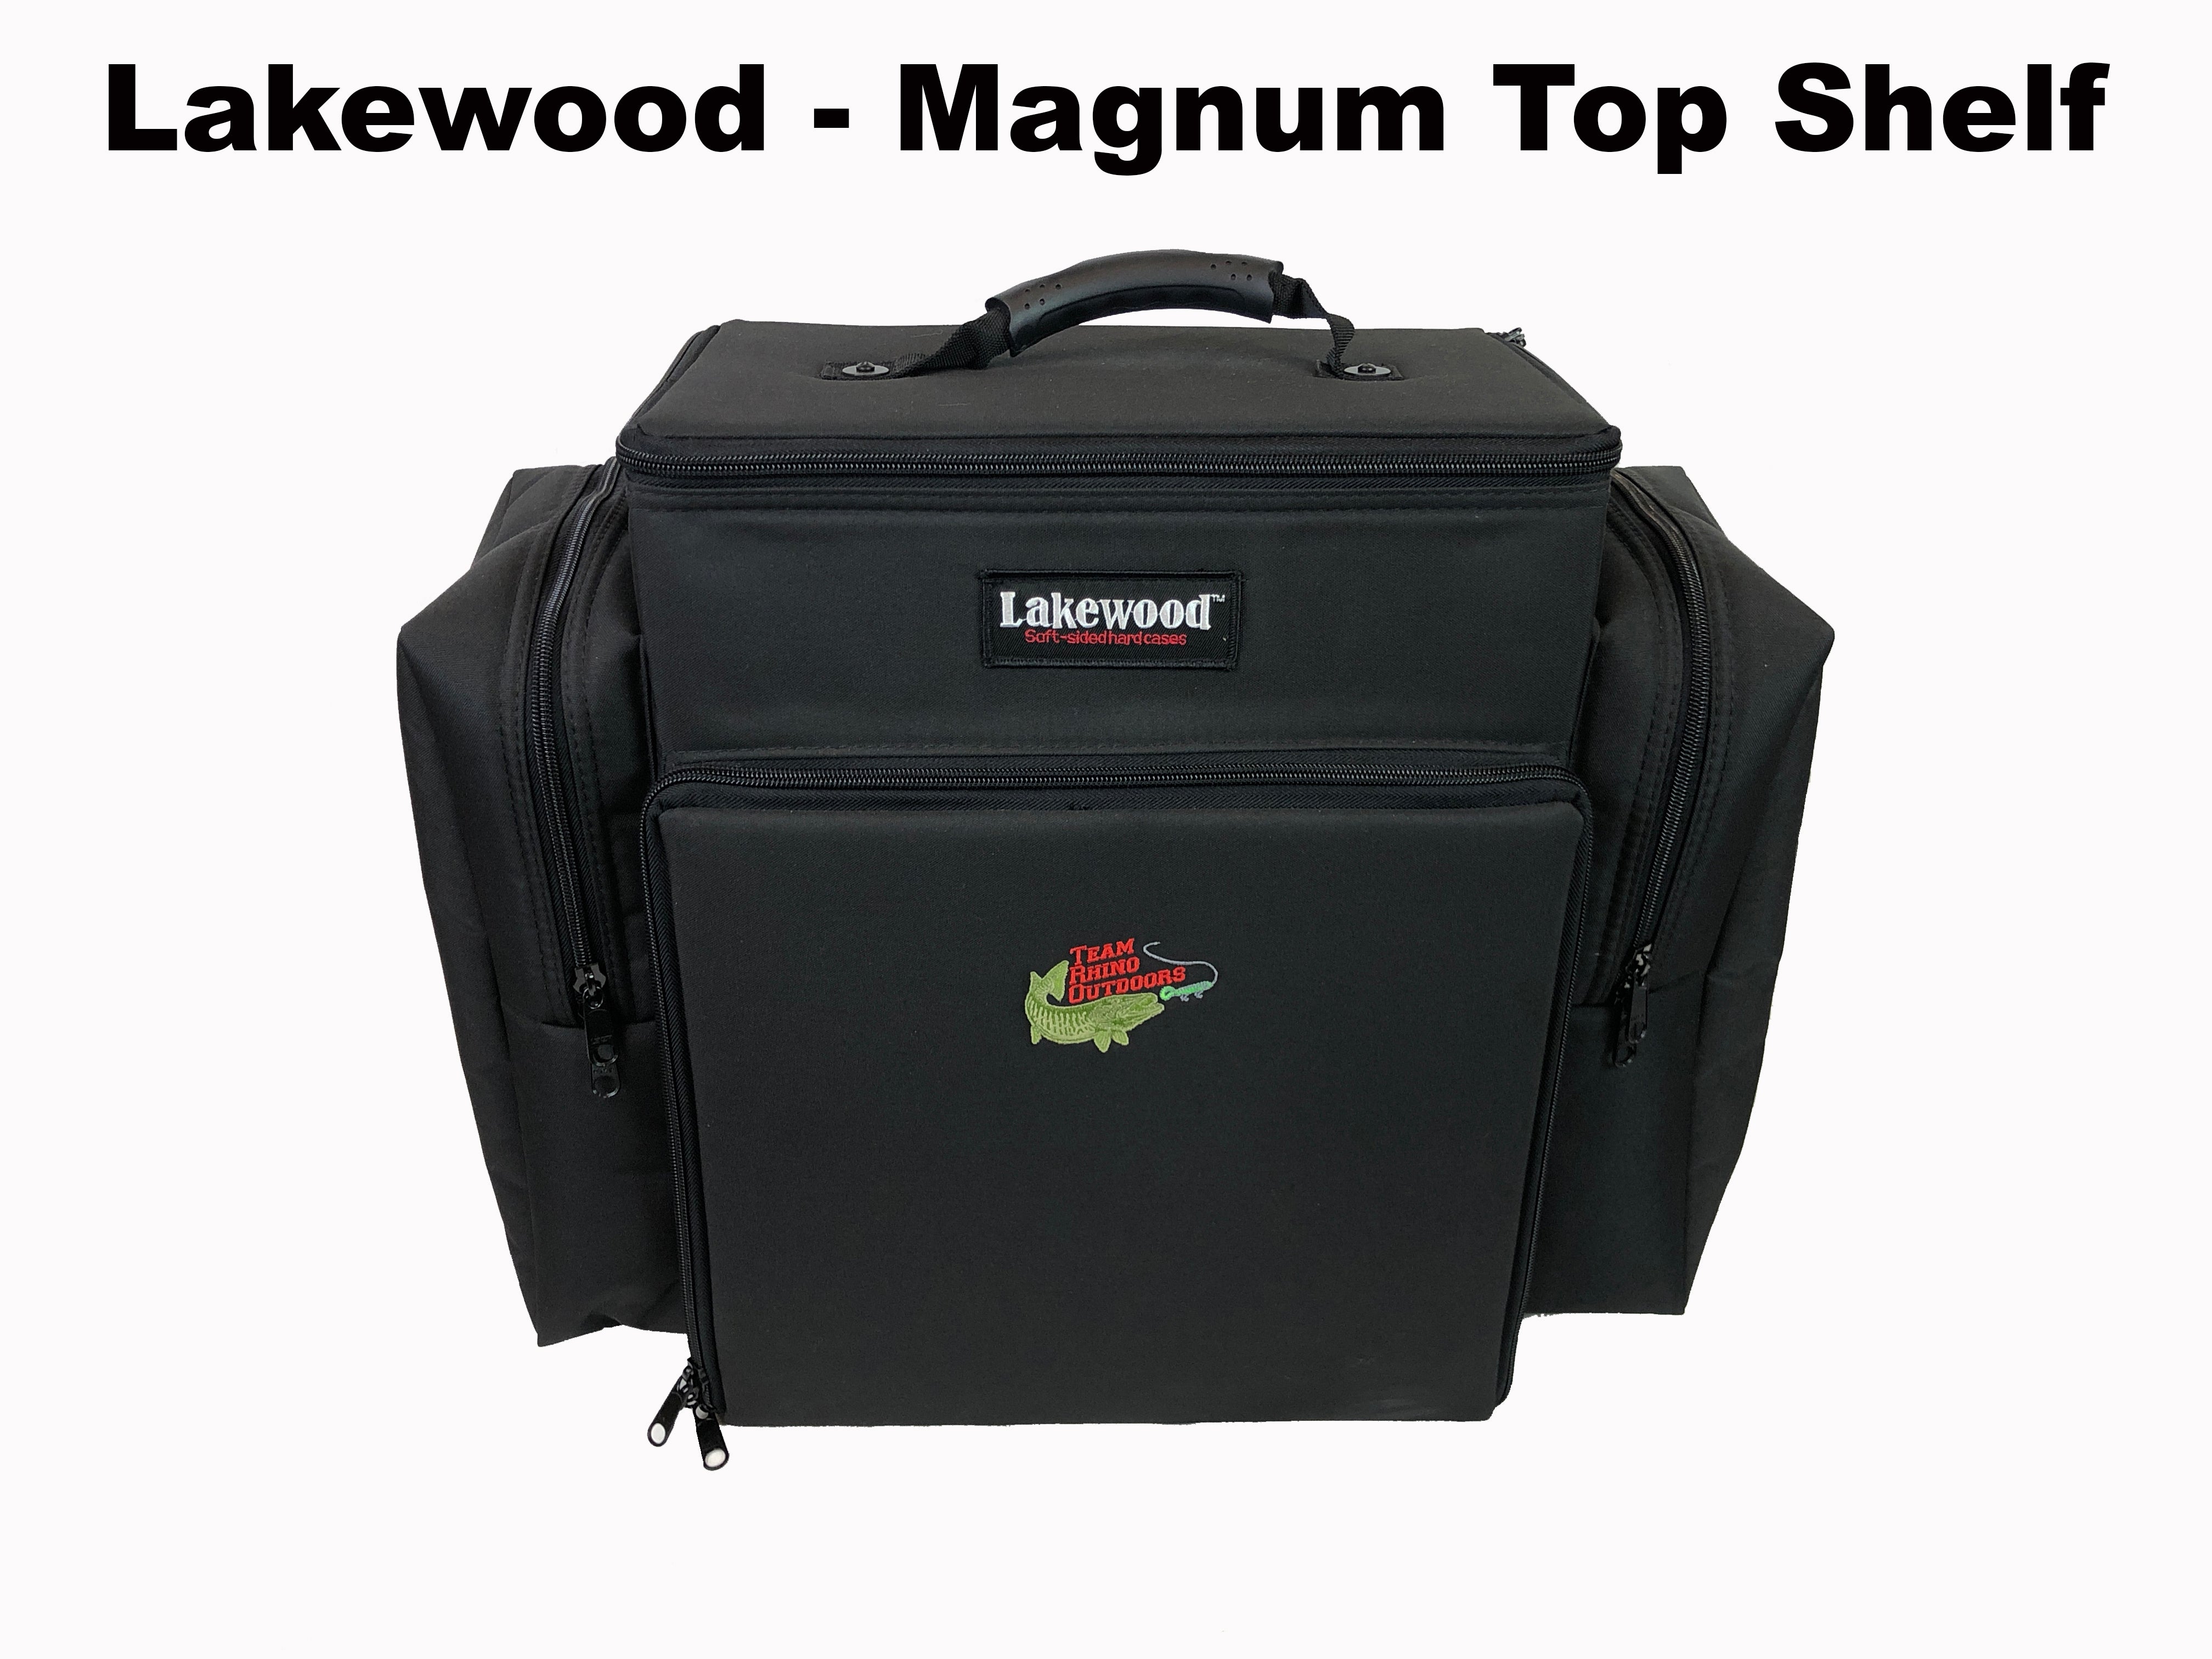 Lakewood Magnum Top Shelf